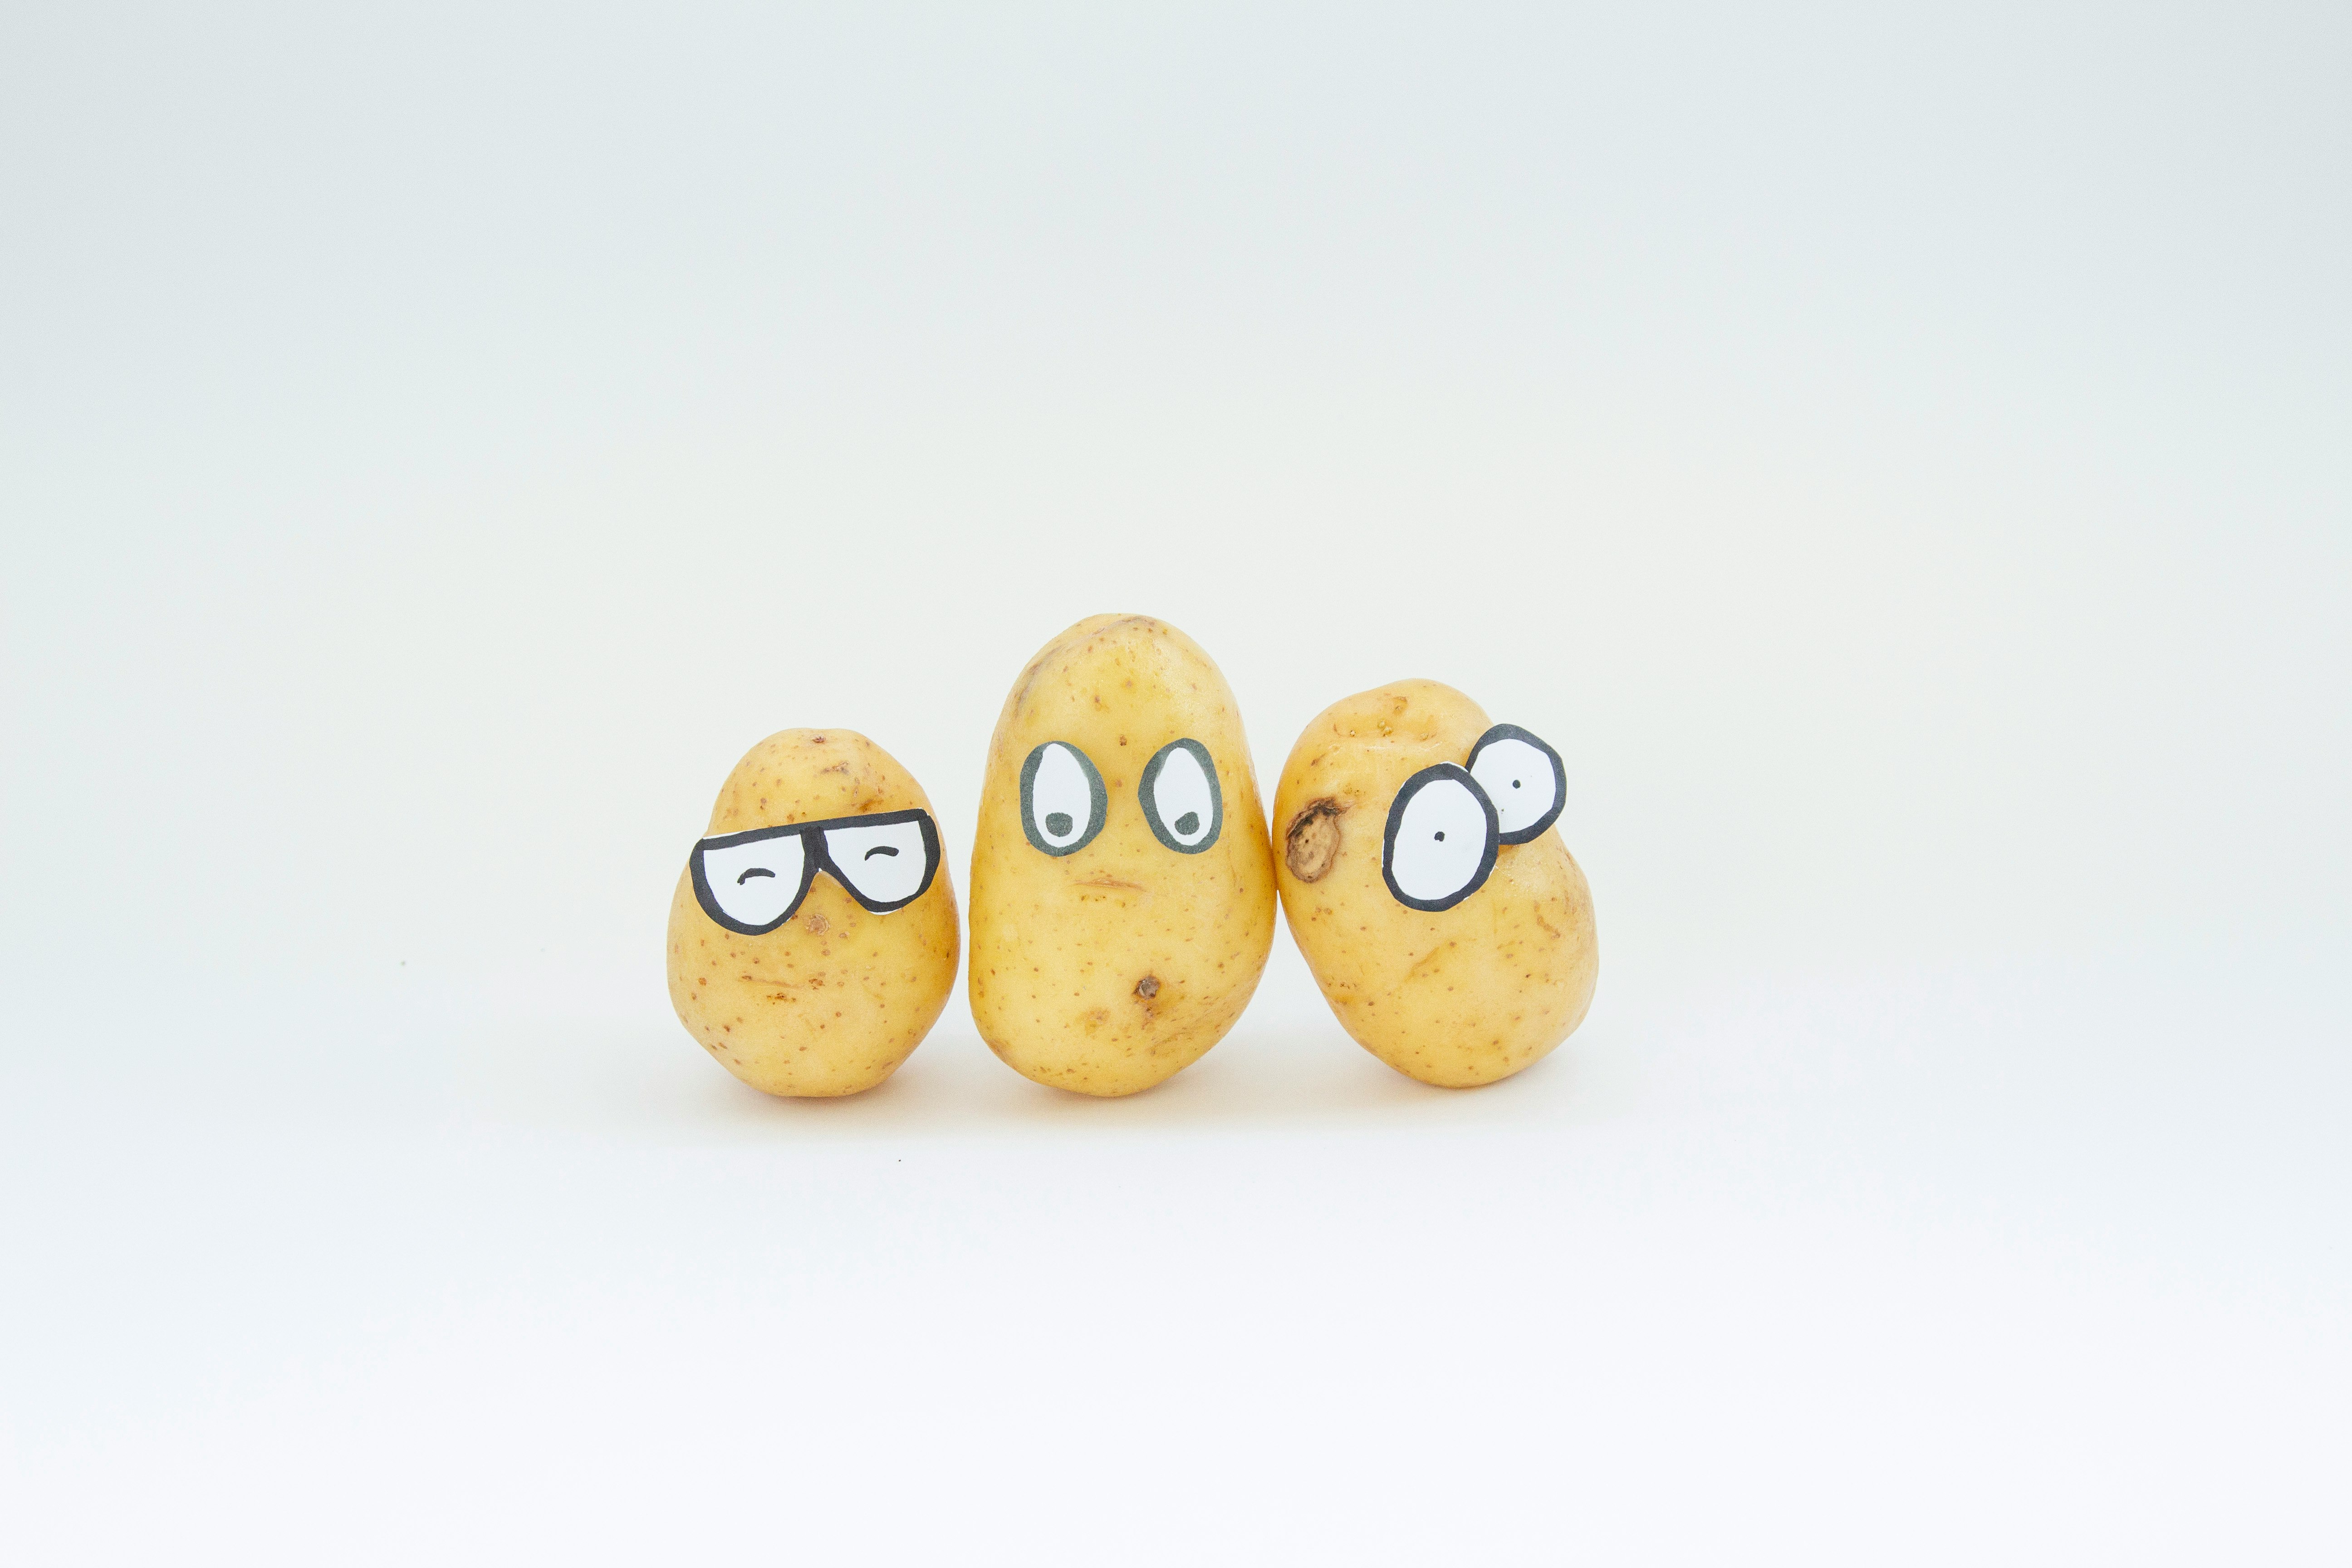 Alive potatoes